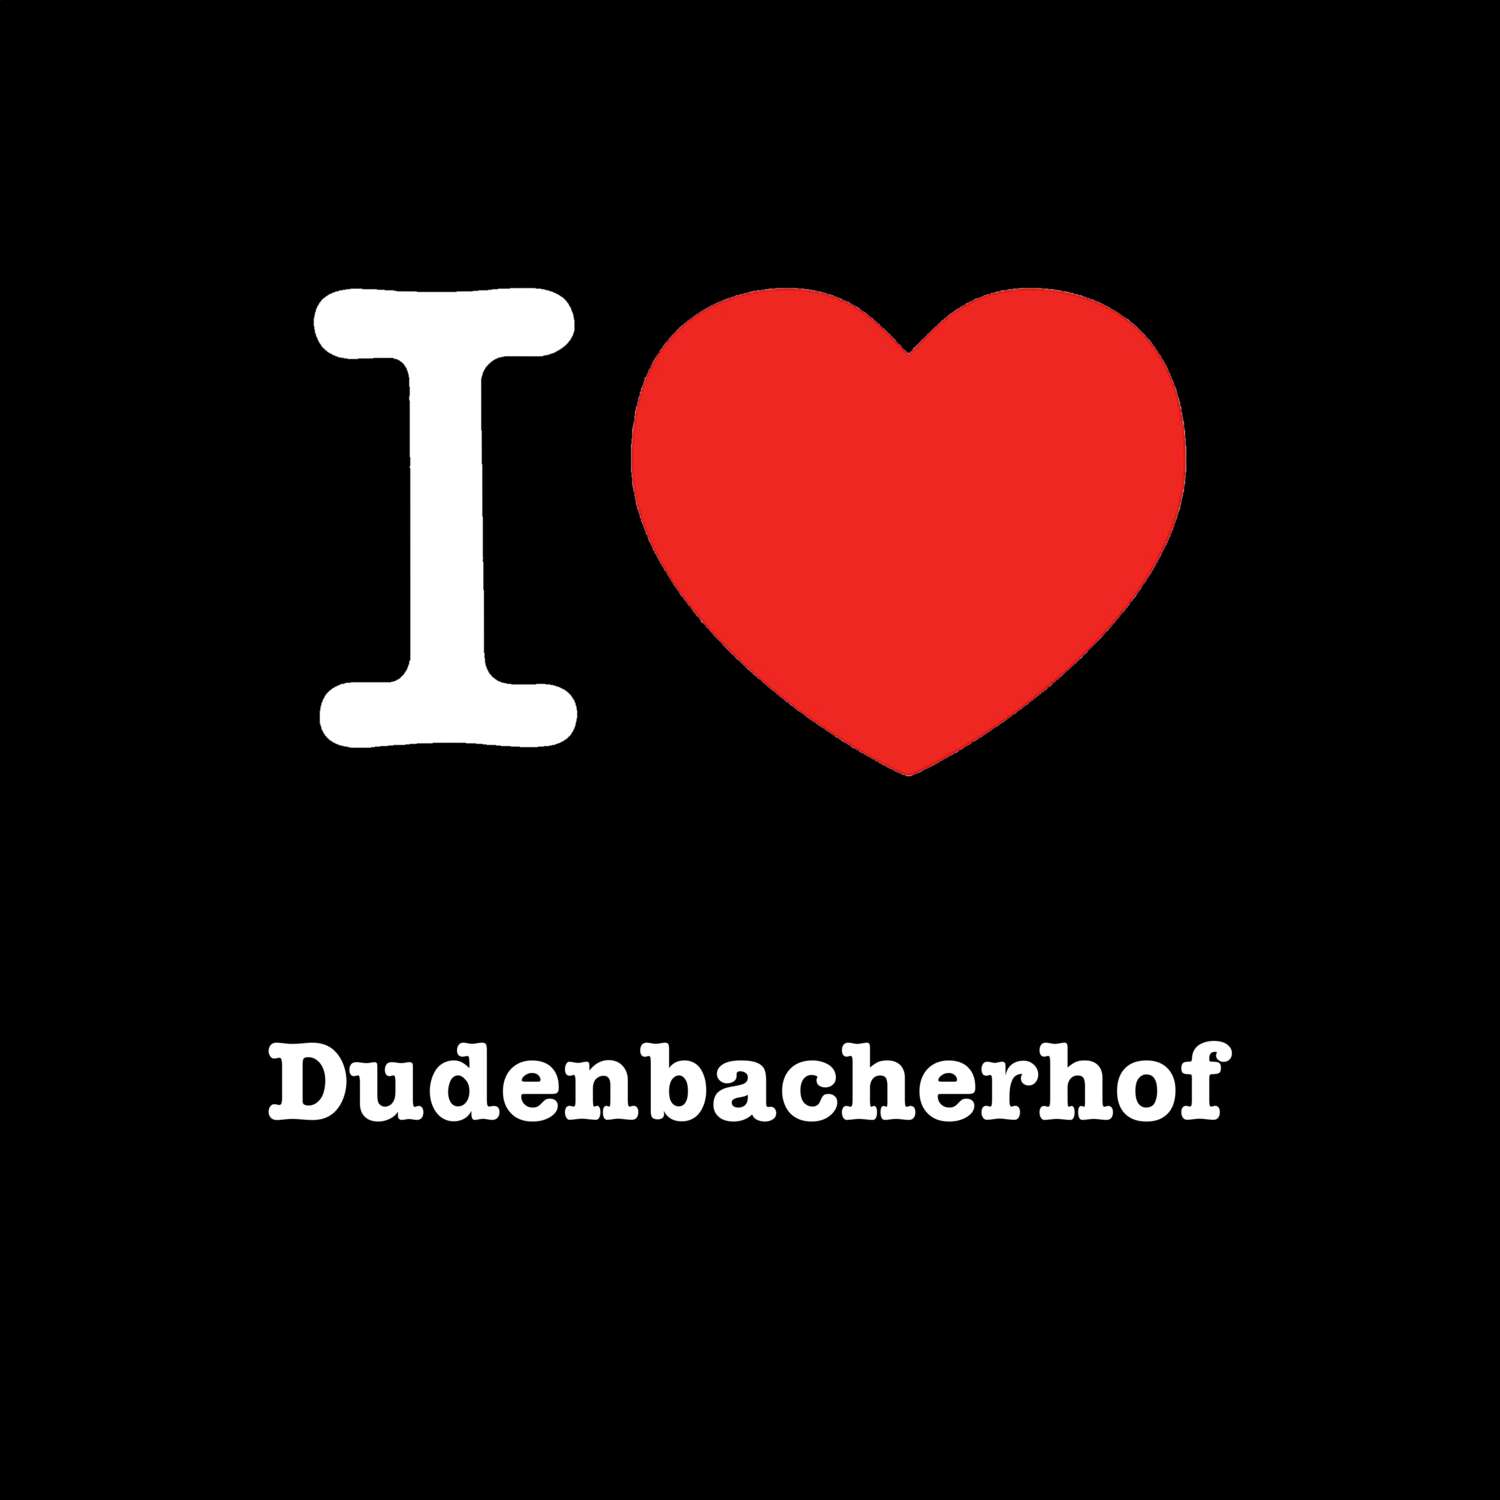 Dudenbacherhof T-Shirt »I love«